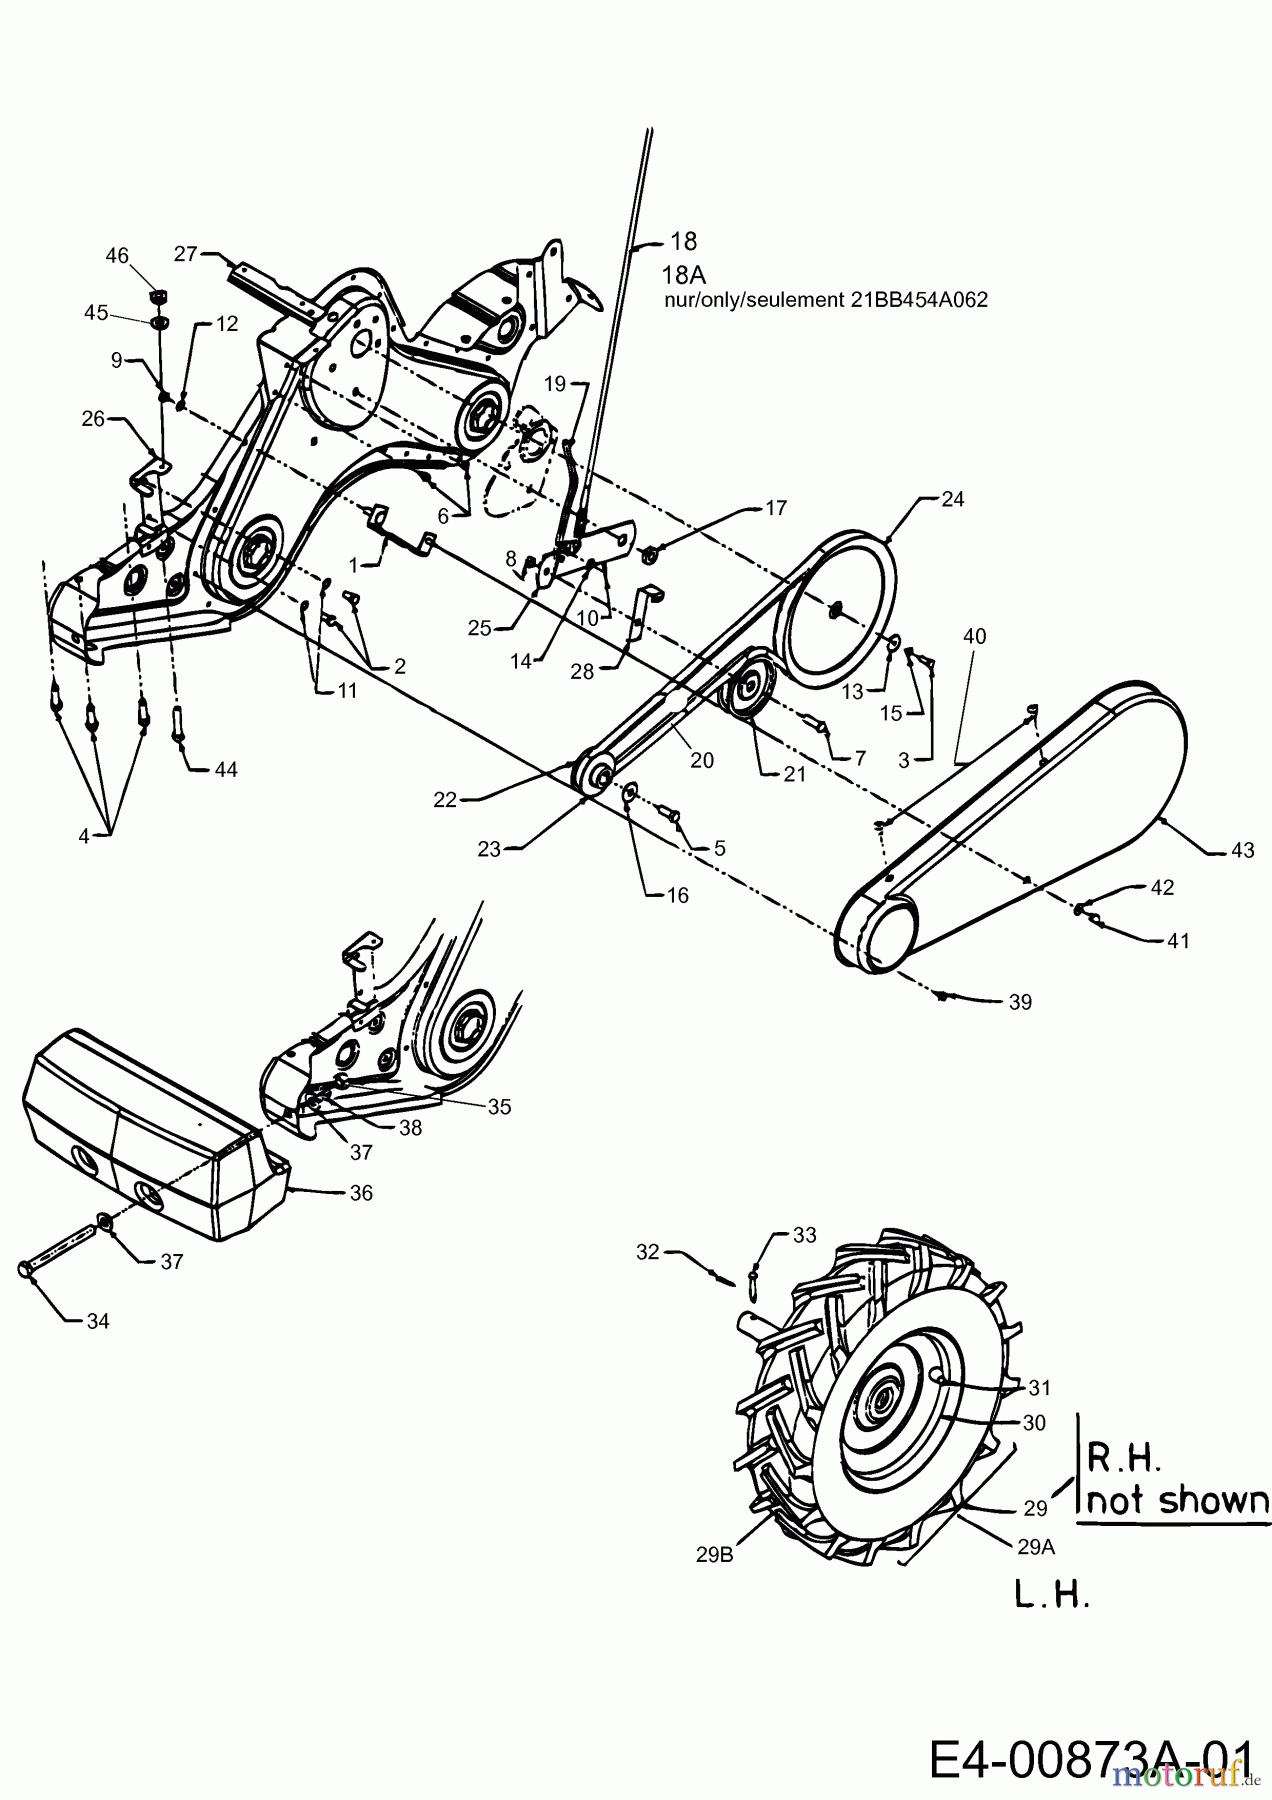  Mastercut Tillers T/450 21A-458B659  (2000) Gearbox, Wheels